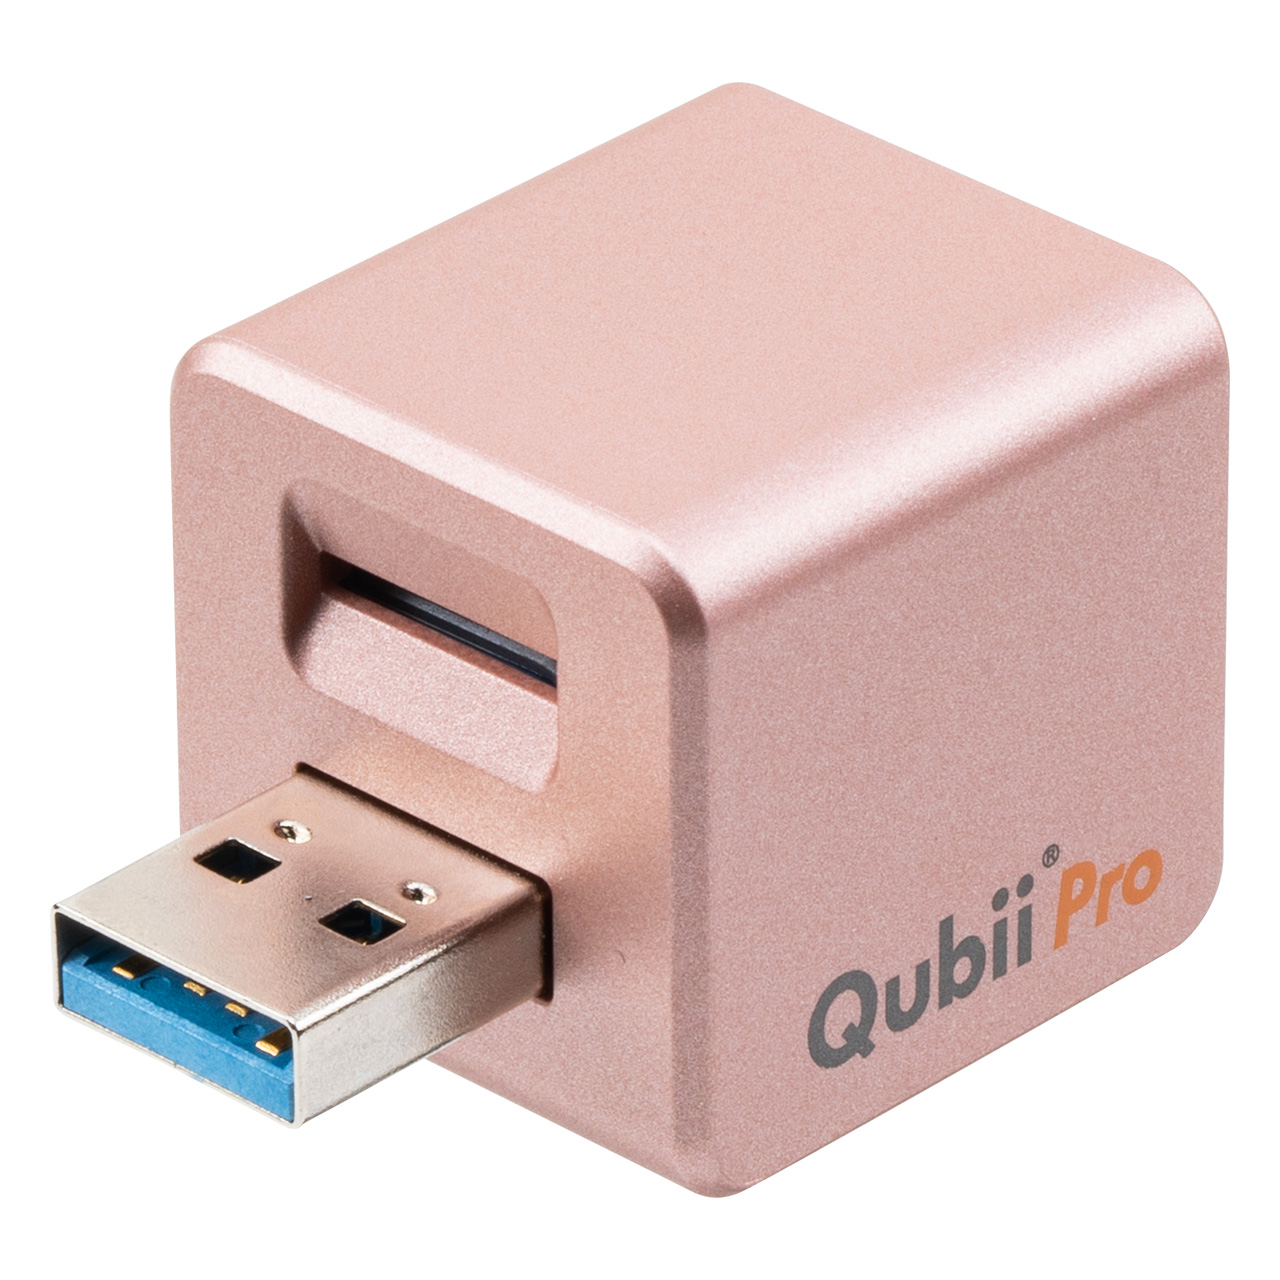 iPhone バックアップ 自動 Qubii Pro iPhone カードリーダー データ保存 microSDカード付属 iPad 充電 USB3.1 Gen1 512GB TS512GUSD300S-A 402-ADRIP011512